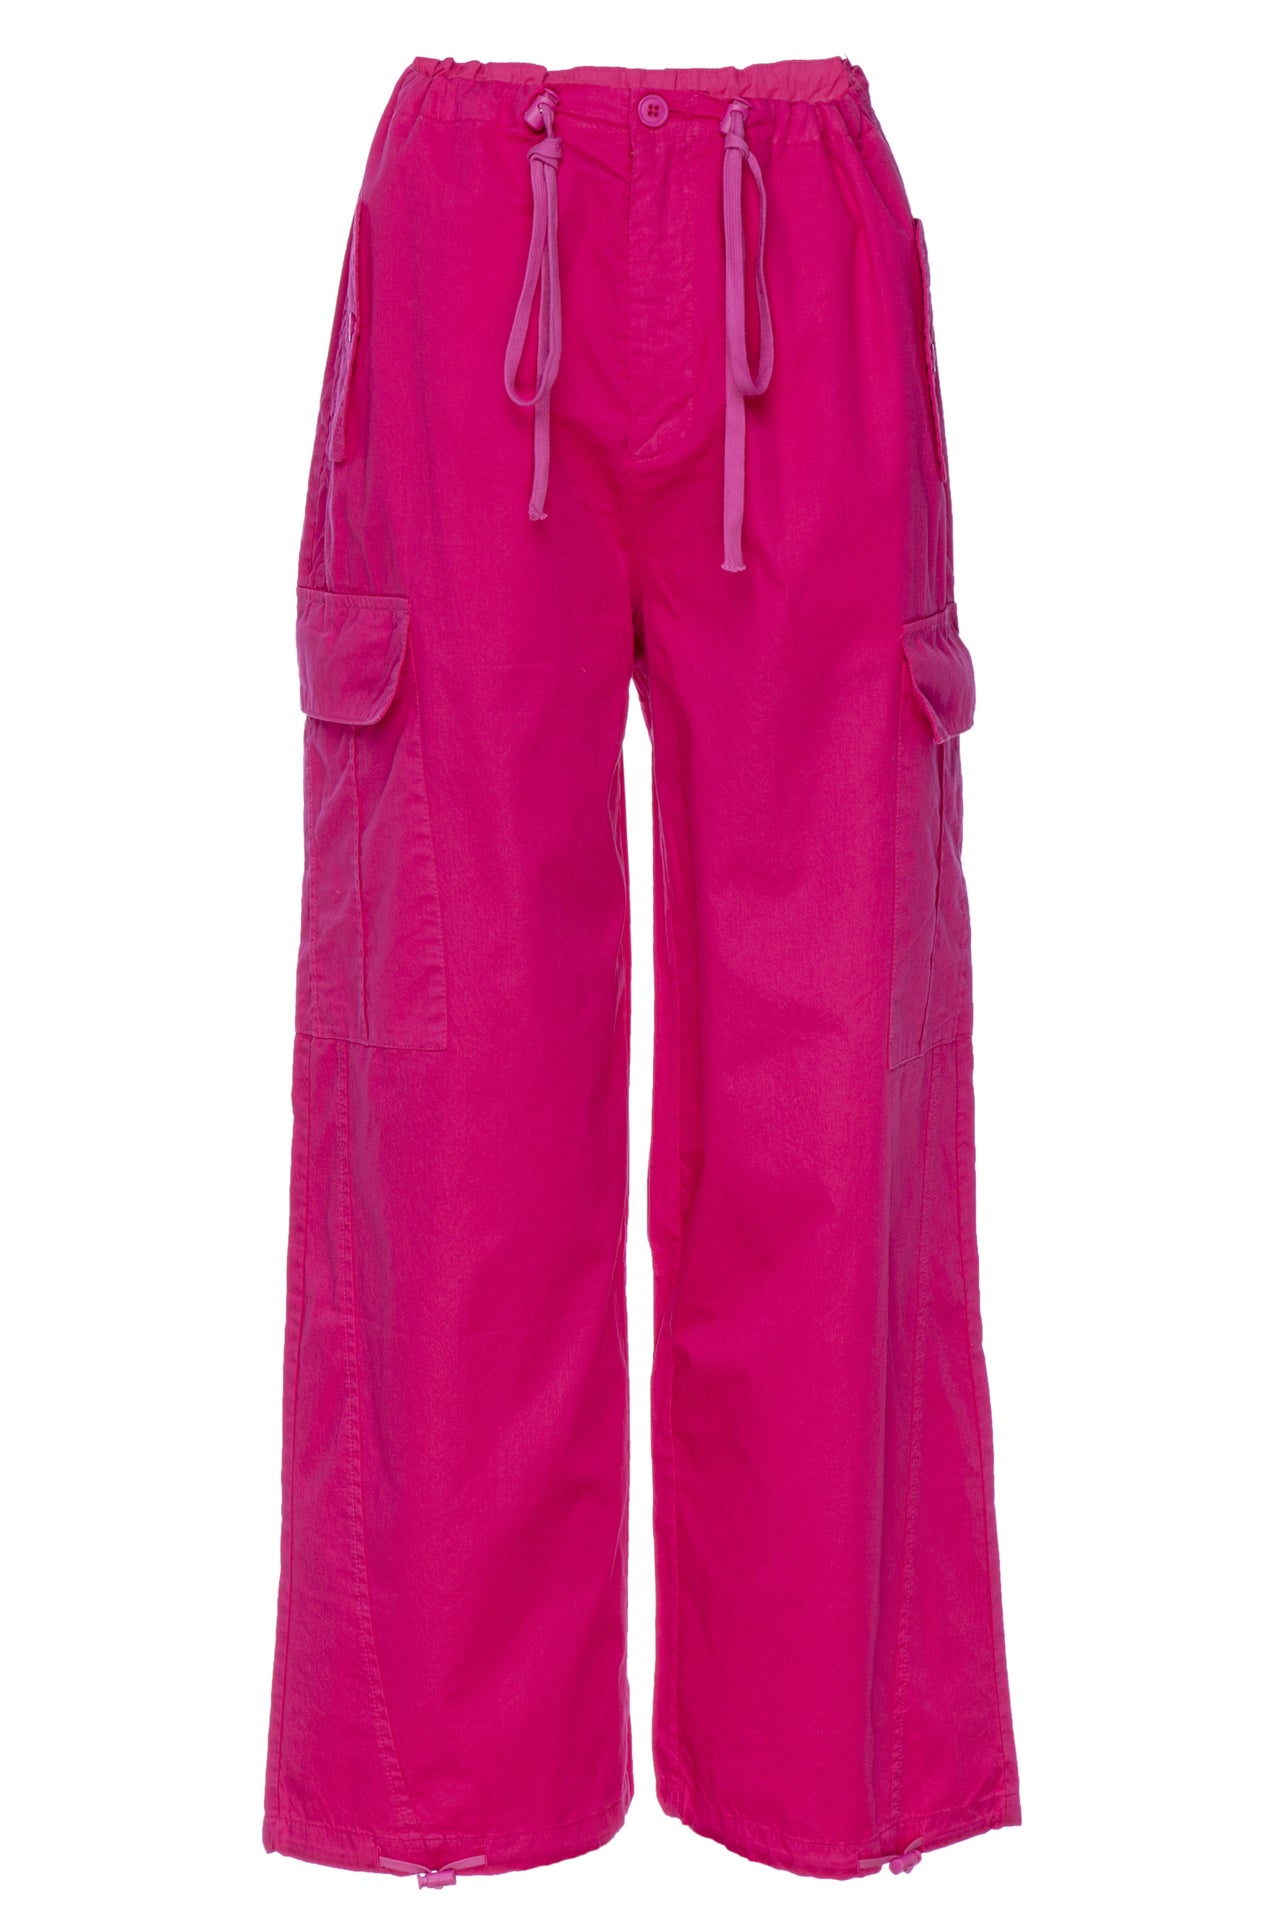 Parachute Pant Pink, Pant bottom by Good American | LIT Boutique